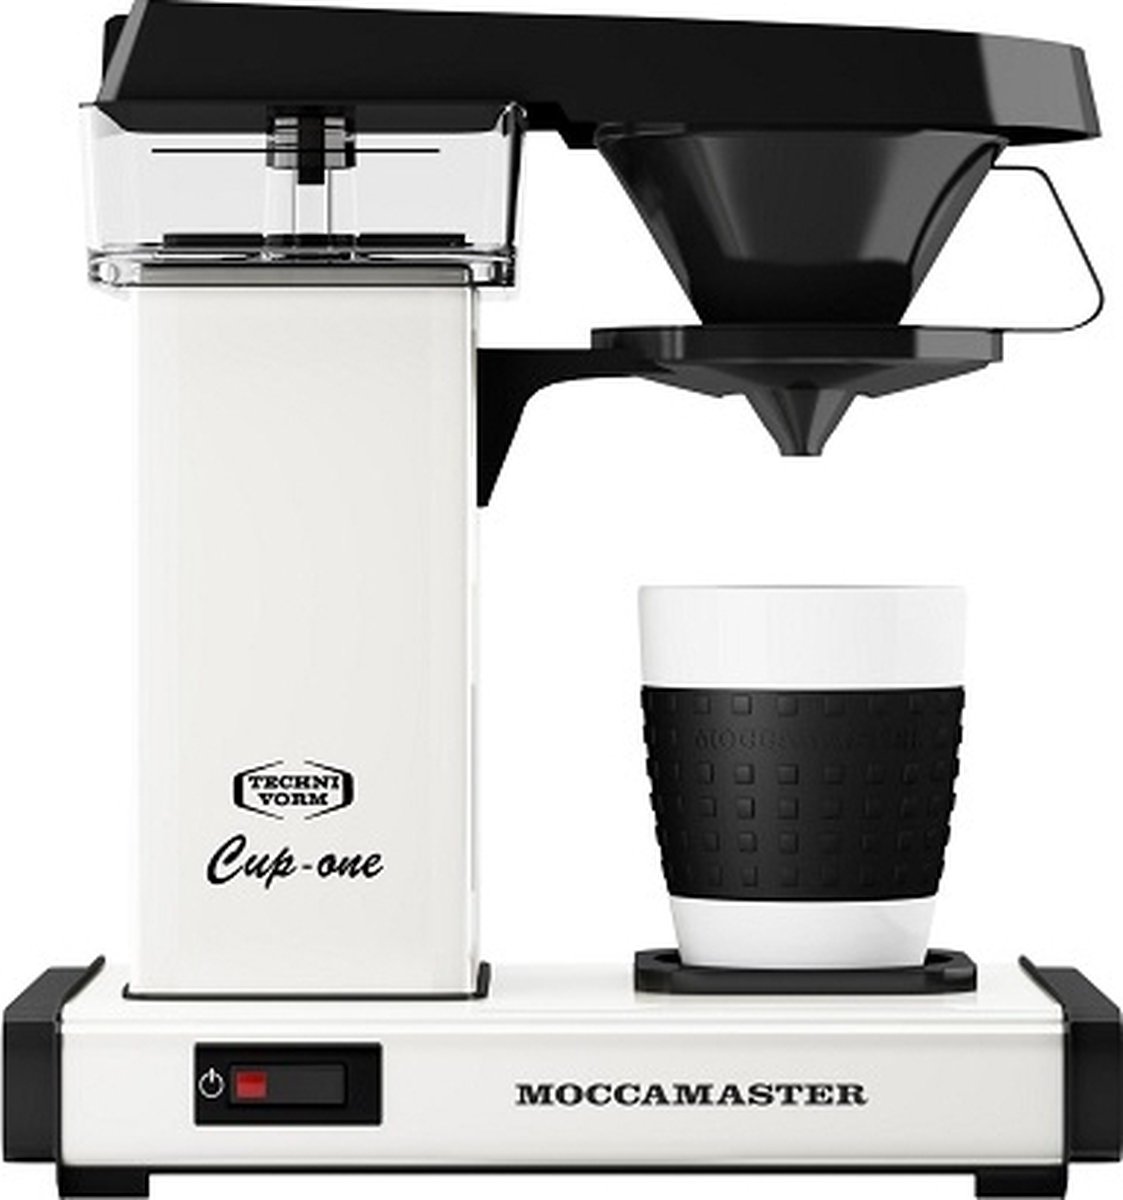 Moccamaster Cup-one - Koffiezetapparaat - Off-white – 5 jaar garantie